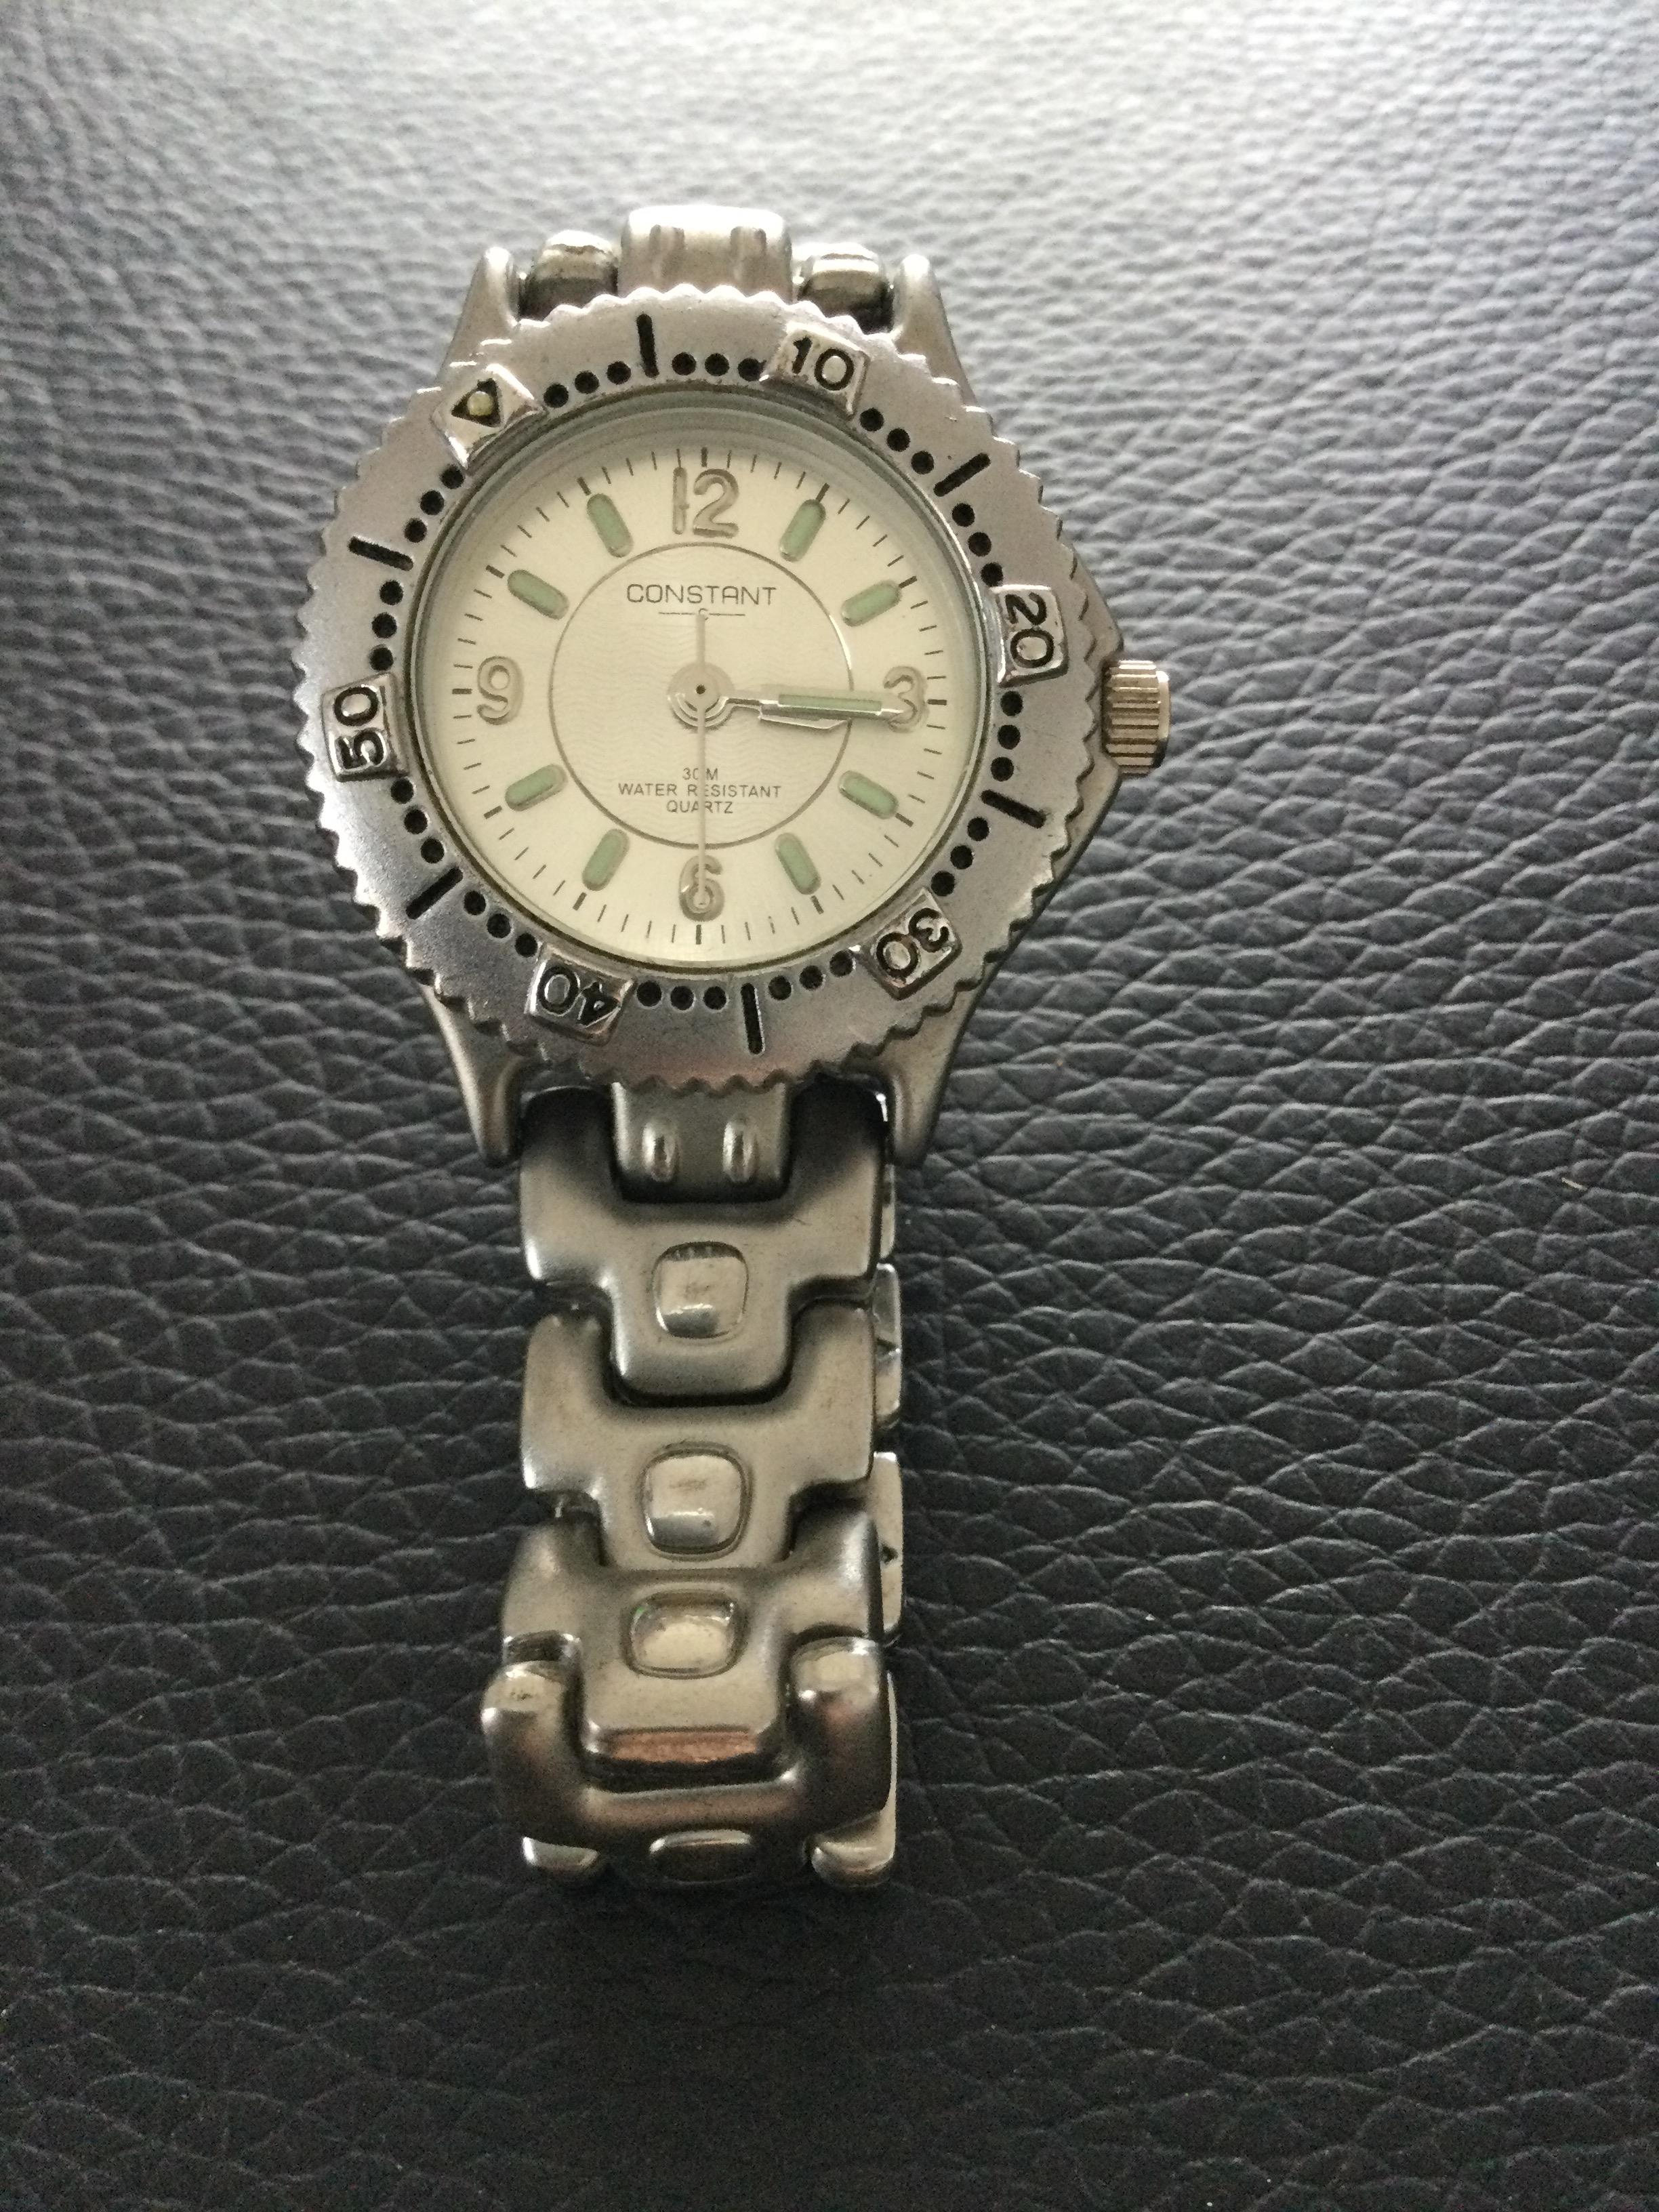 Constant Ladies Quartz Wristwatch (GS74) A Ladies Little Constant Quartz wristwatch in working